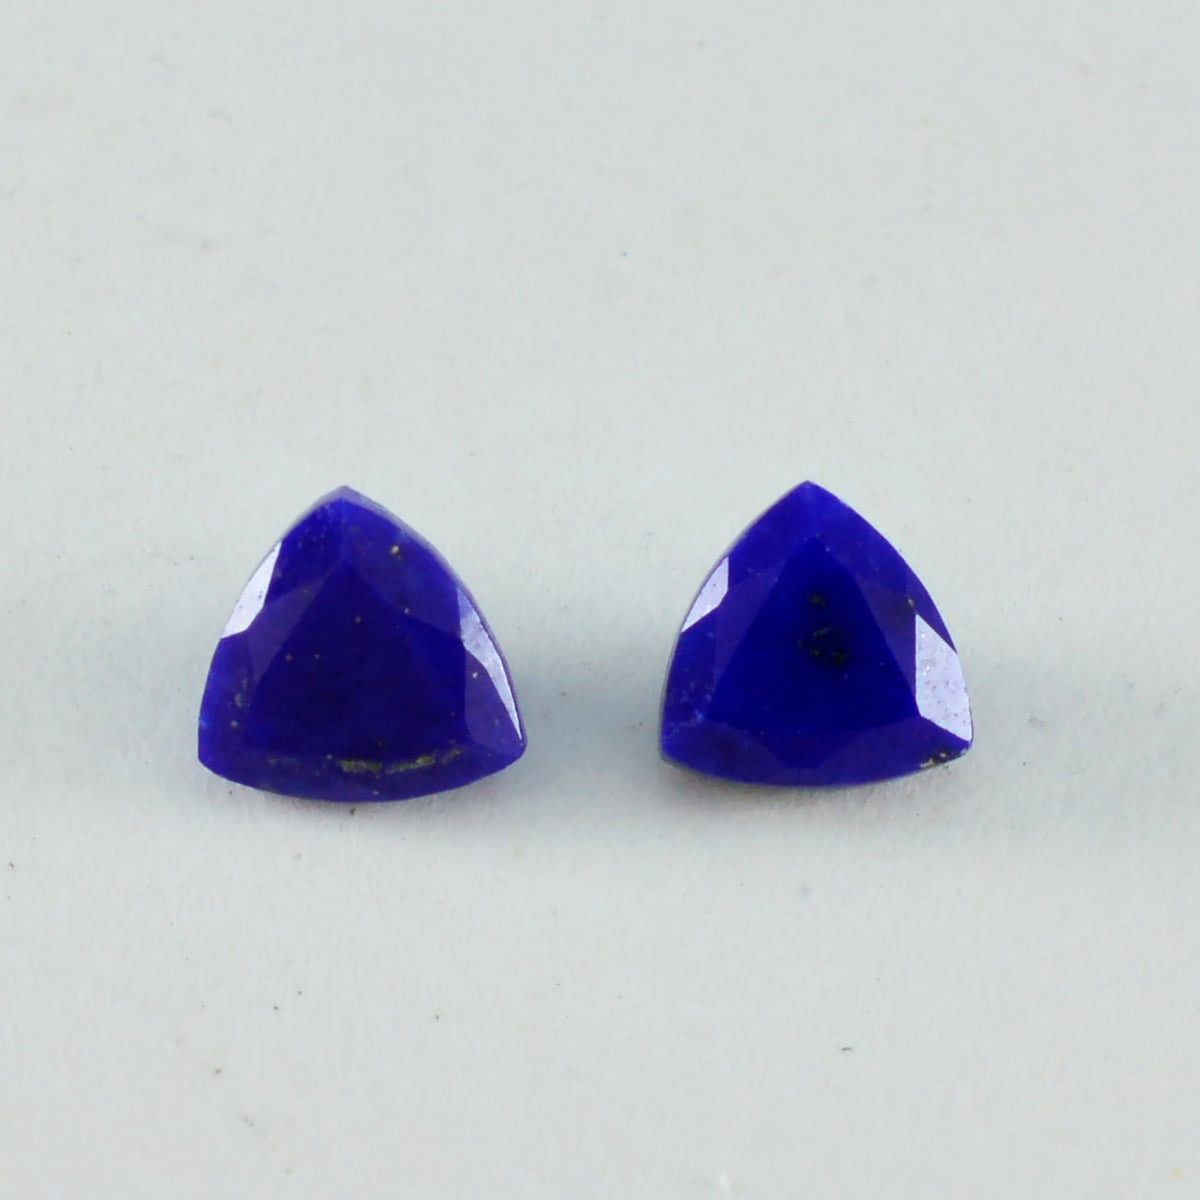 Riyogems 1PC Genuine Blue Lapis Lazuli Faceted 10x10 mm Trillion Shape A Quality Gem